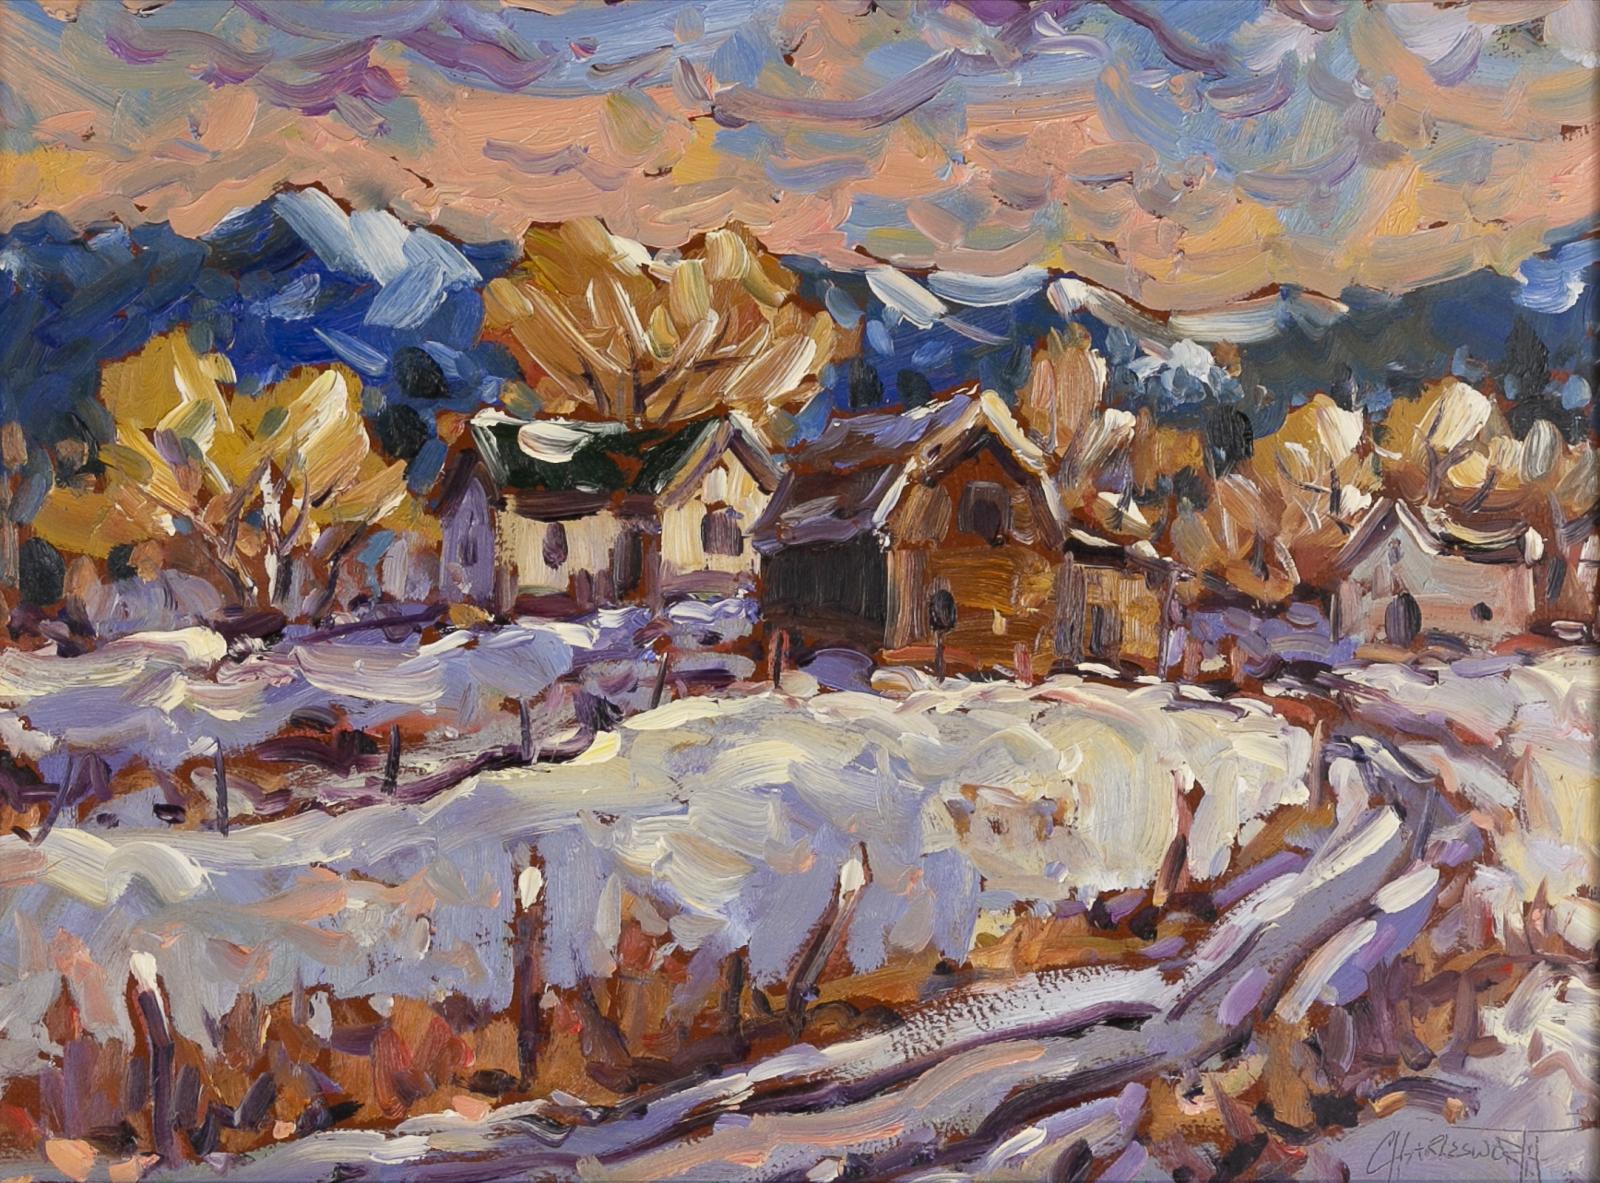 Rod Charlesworth (1955) - Snow In October